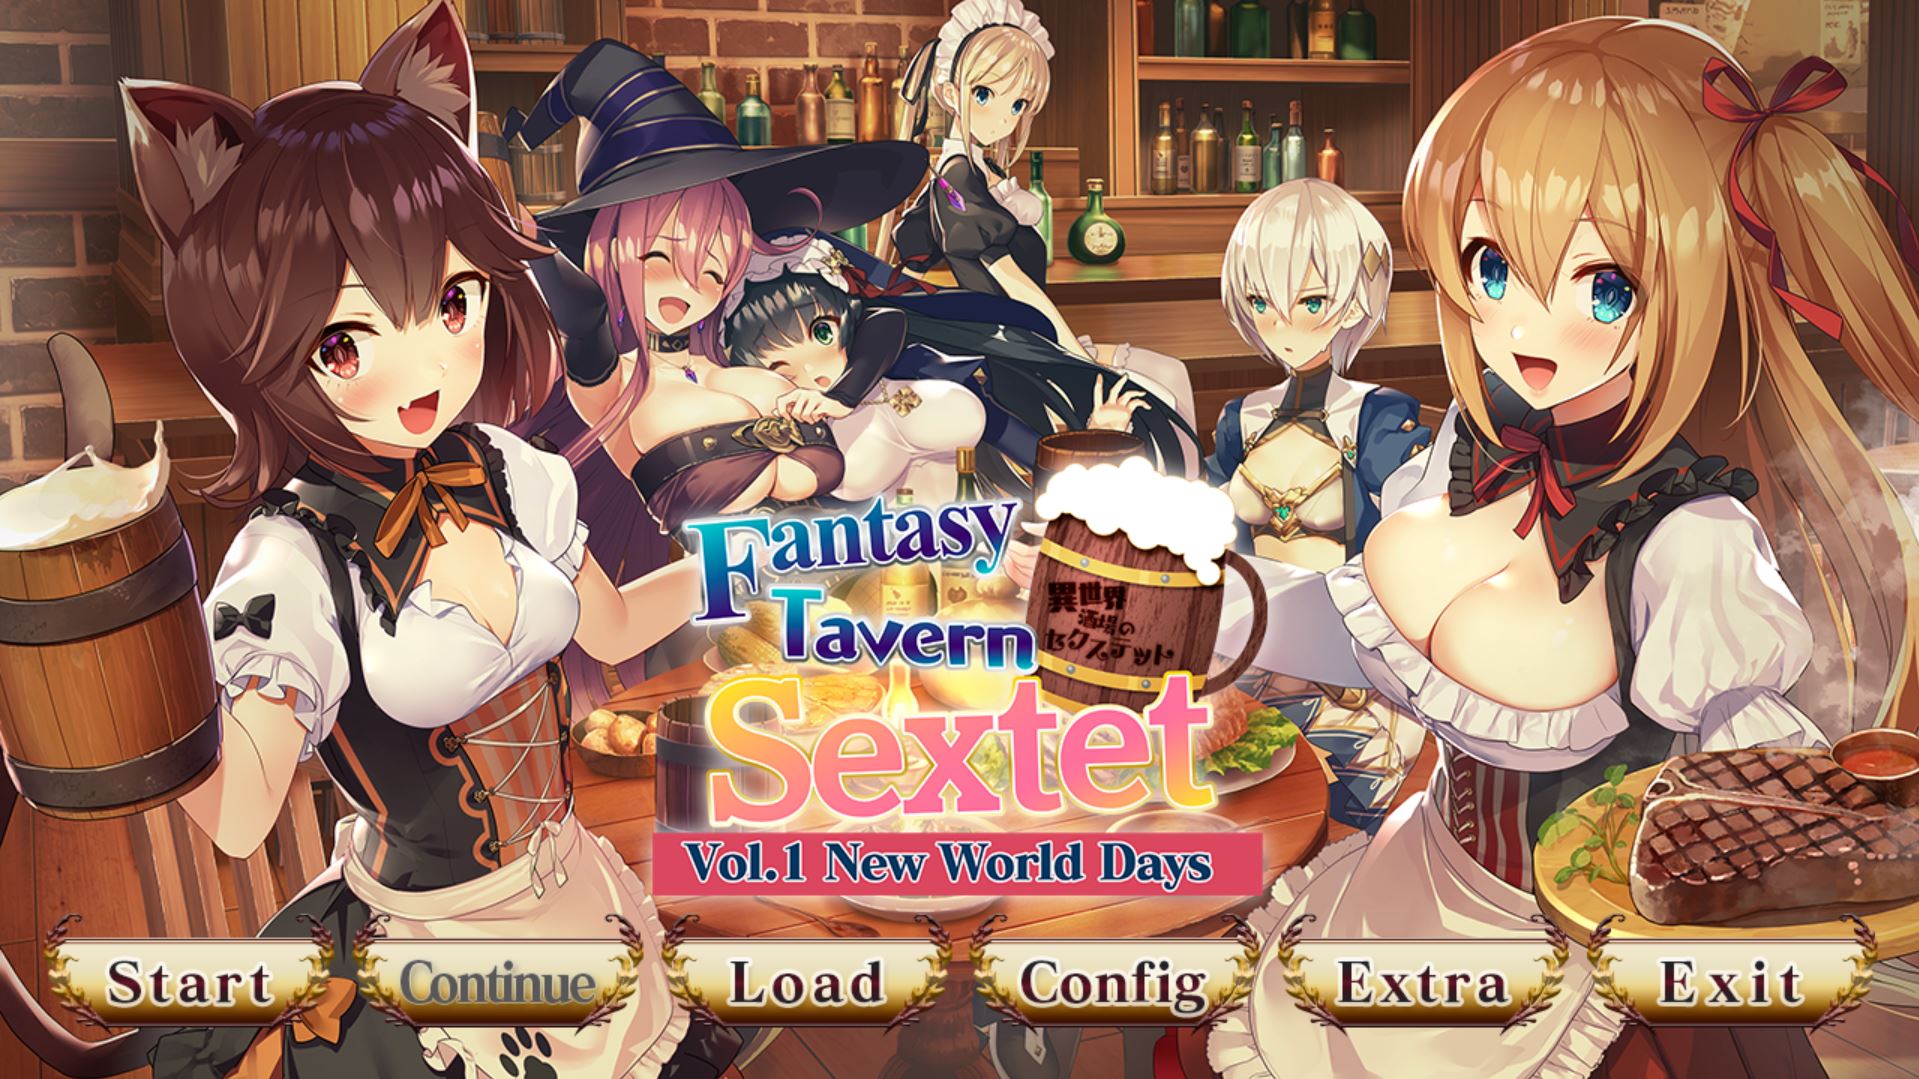 Fantasy Tavern Sextet Vol.1 New World Days porn xxx game download cover